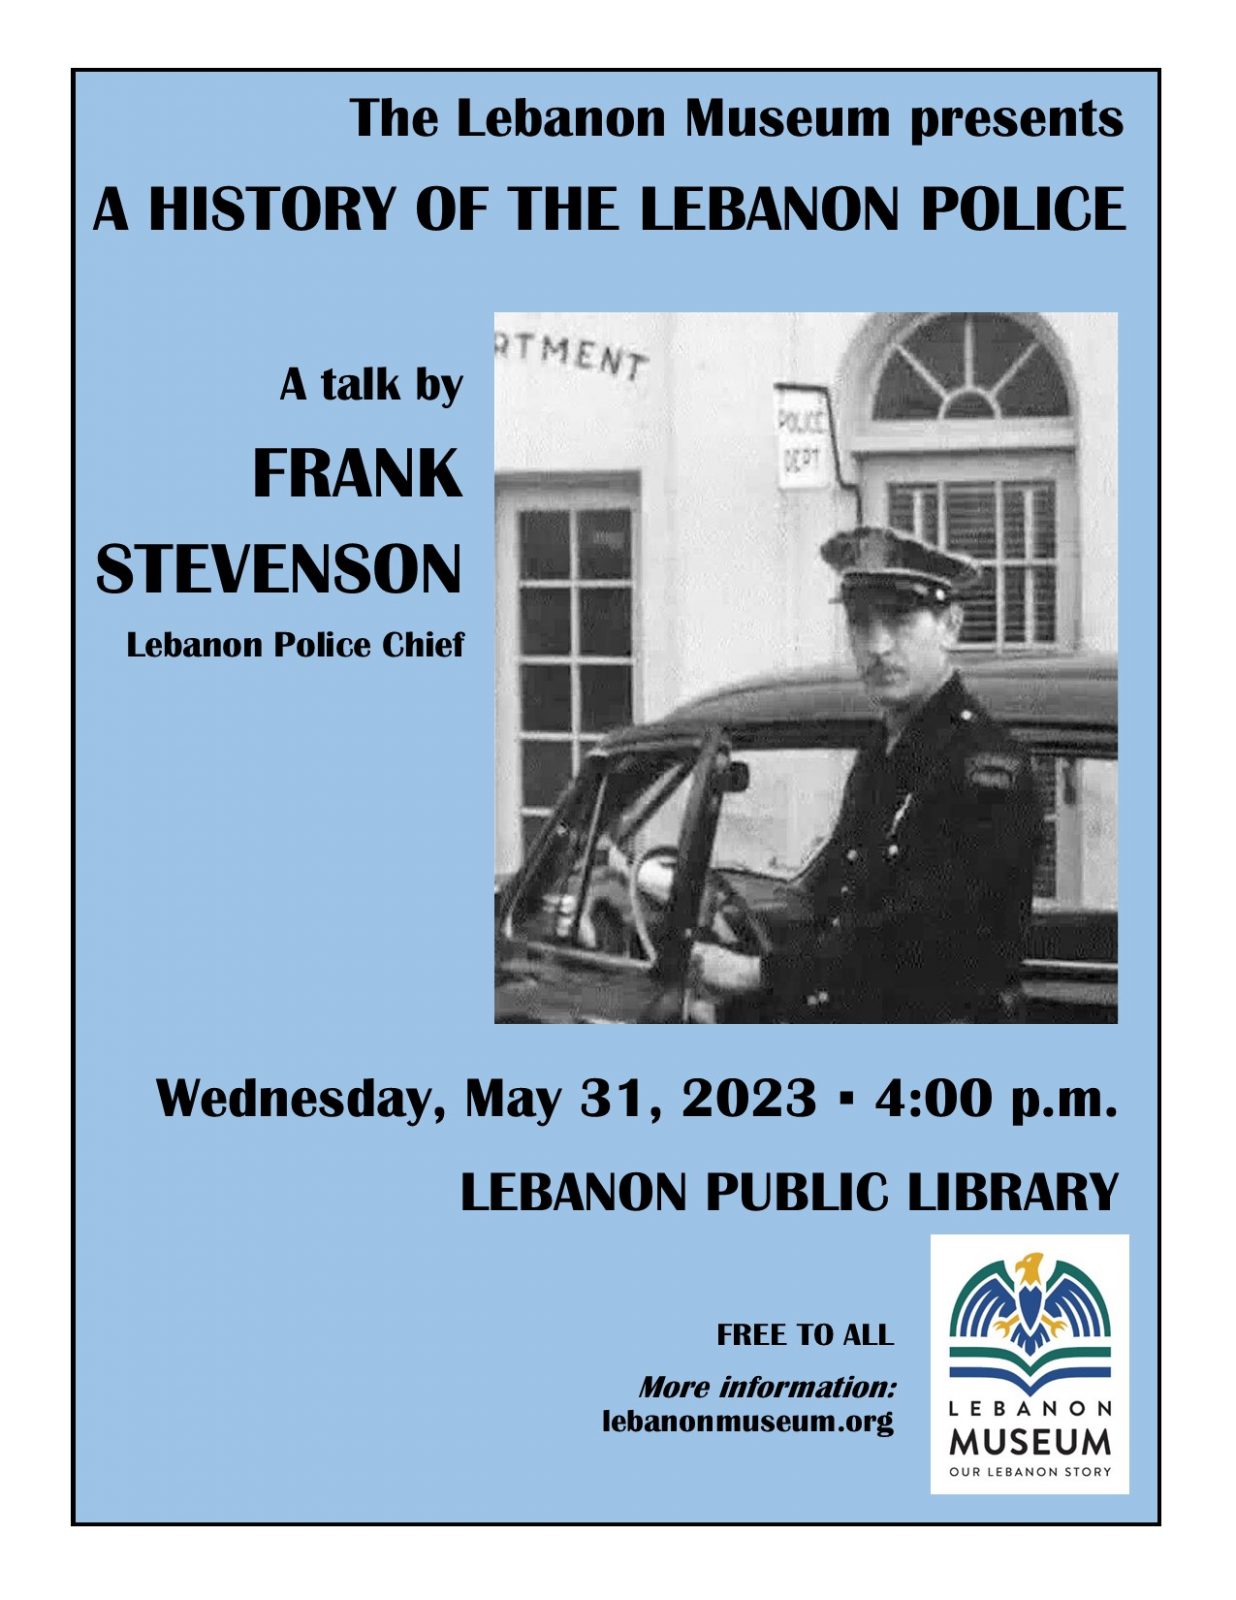 Flyer for History of Lebanon Police